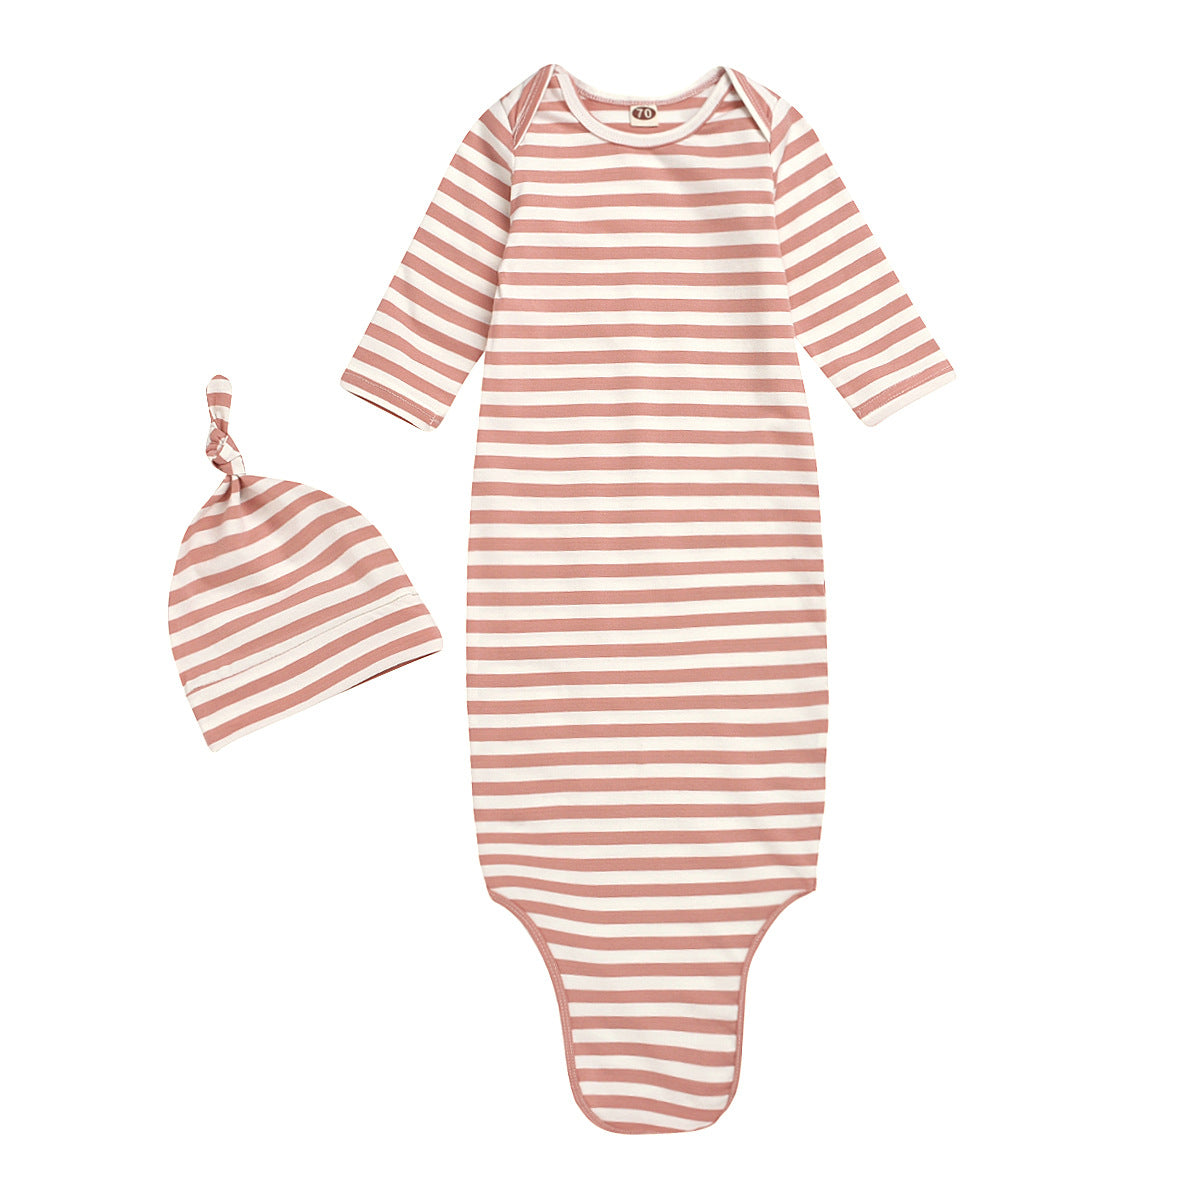 Baby striped long-sleeved one-piece pajamas newborn one-piece